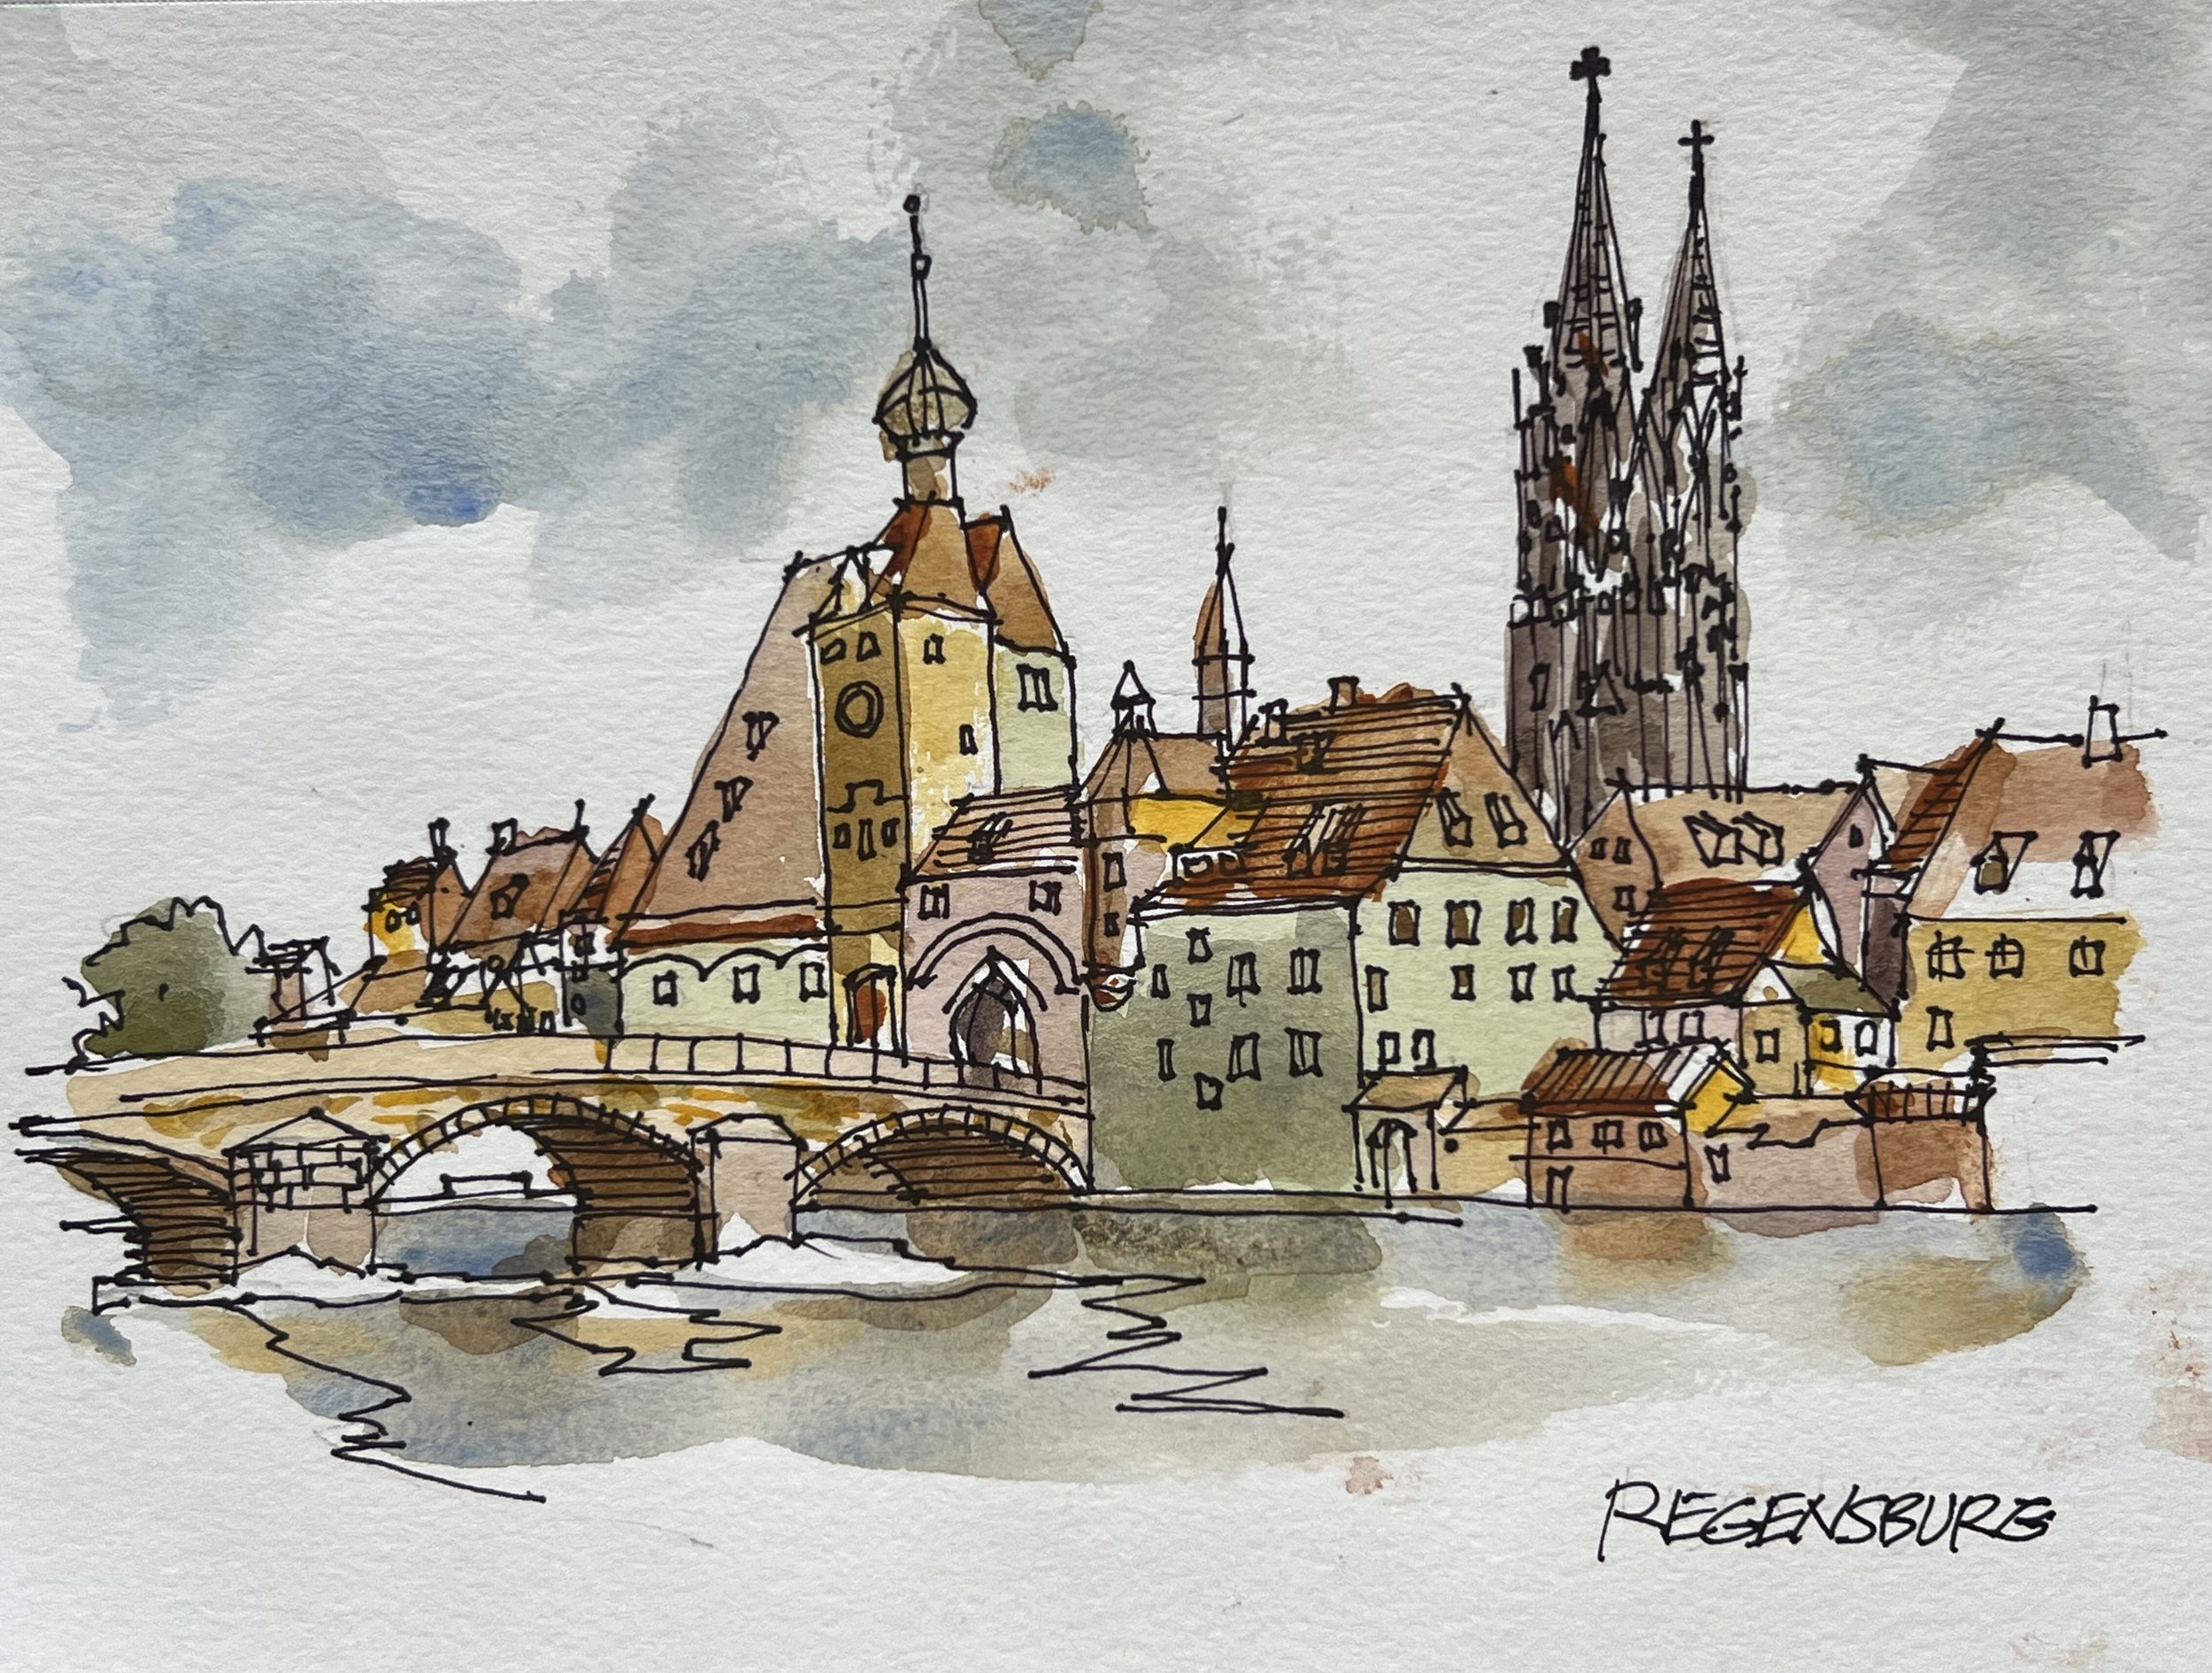 Regensburg waterfront